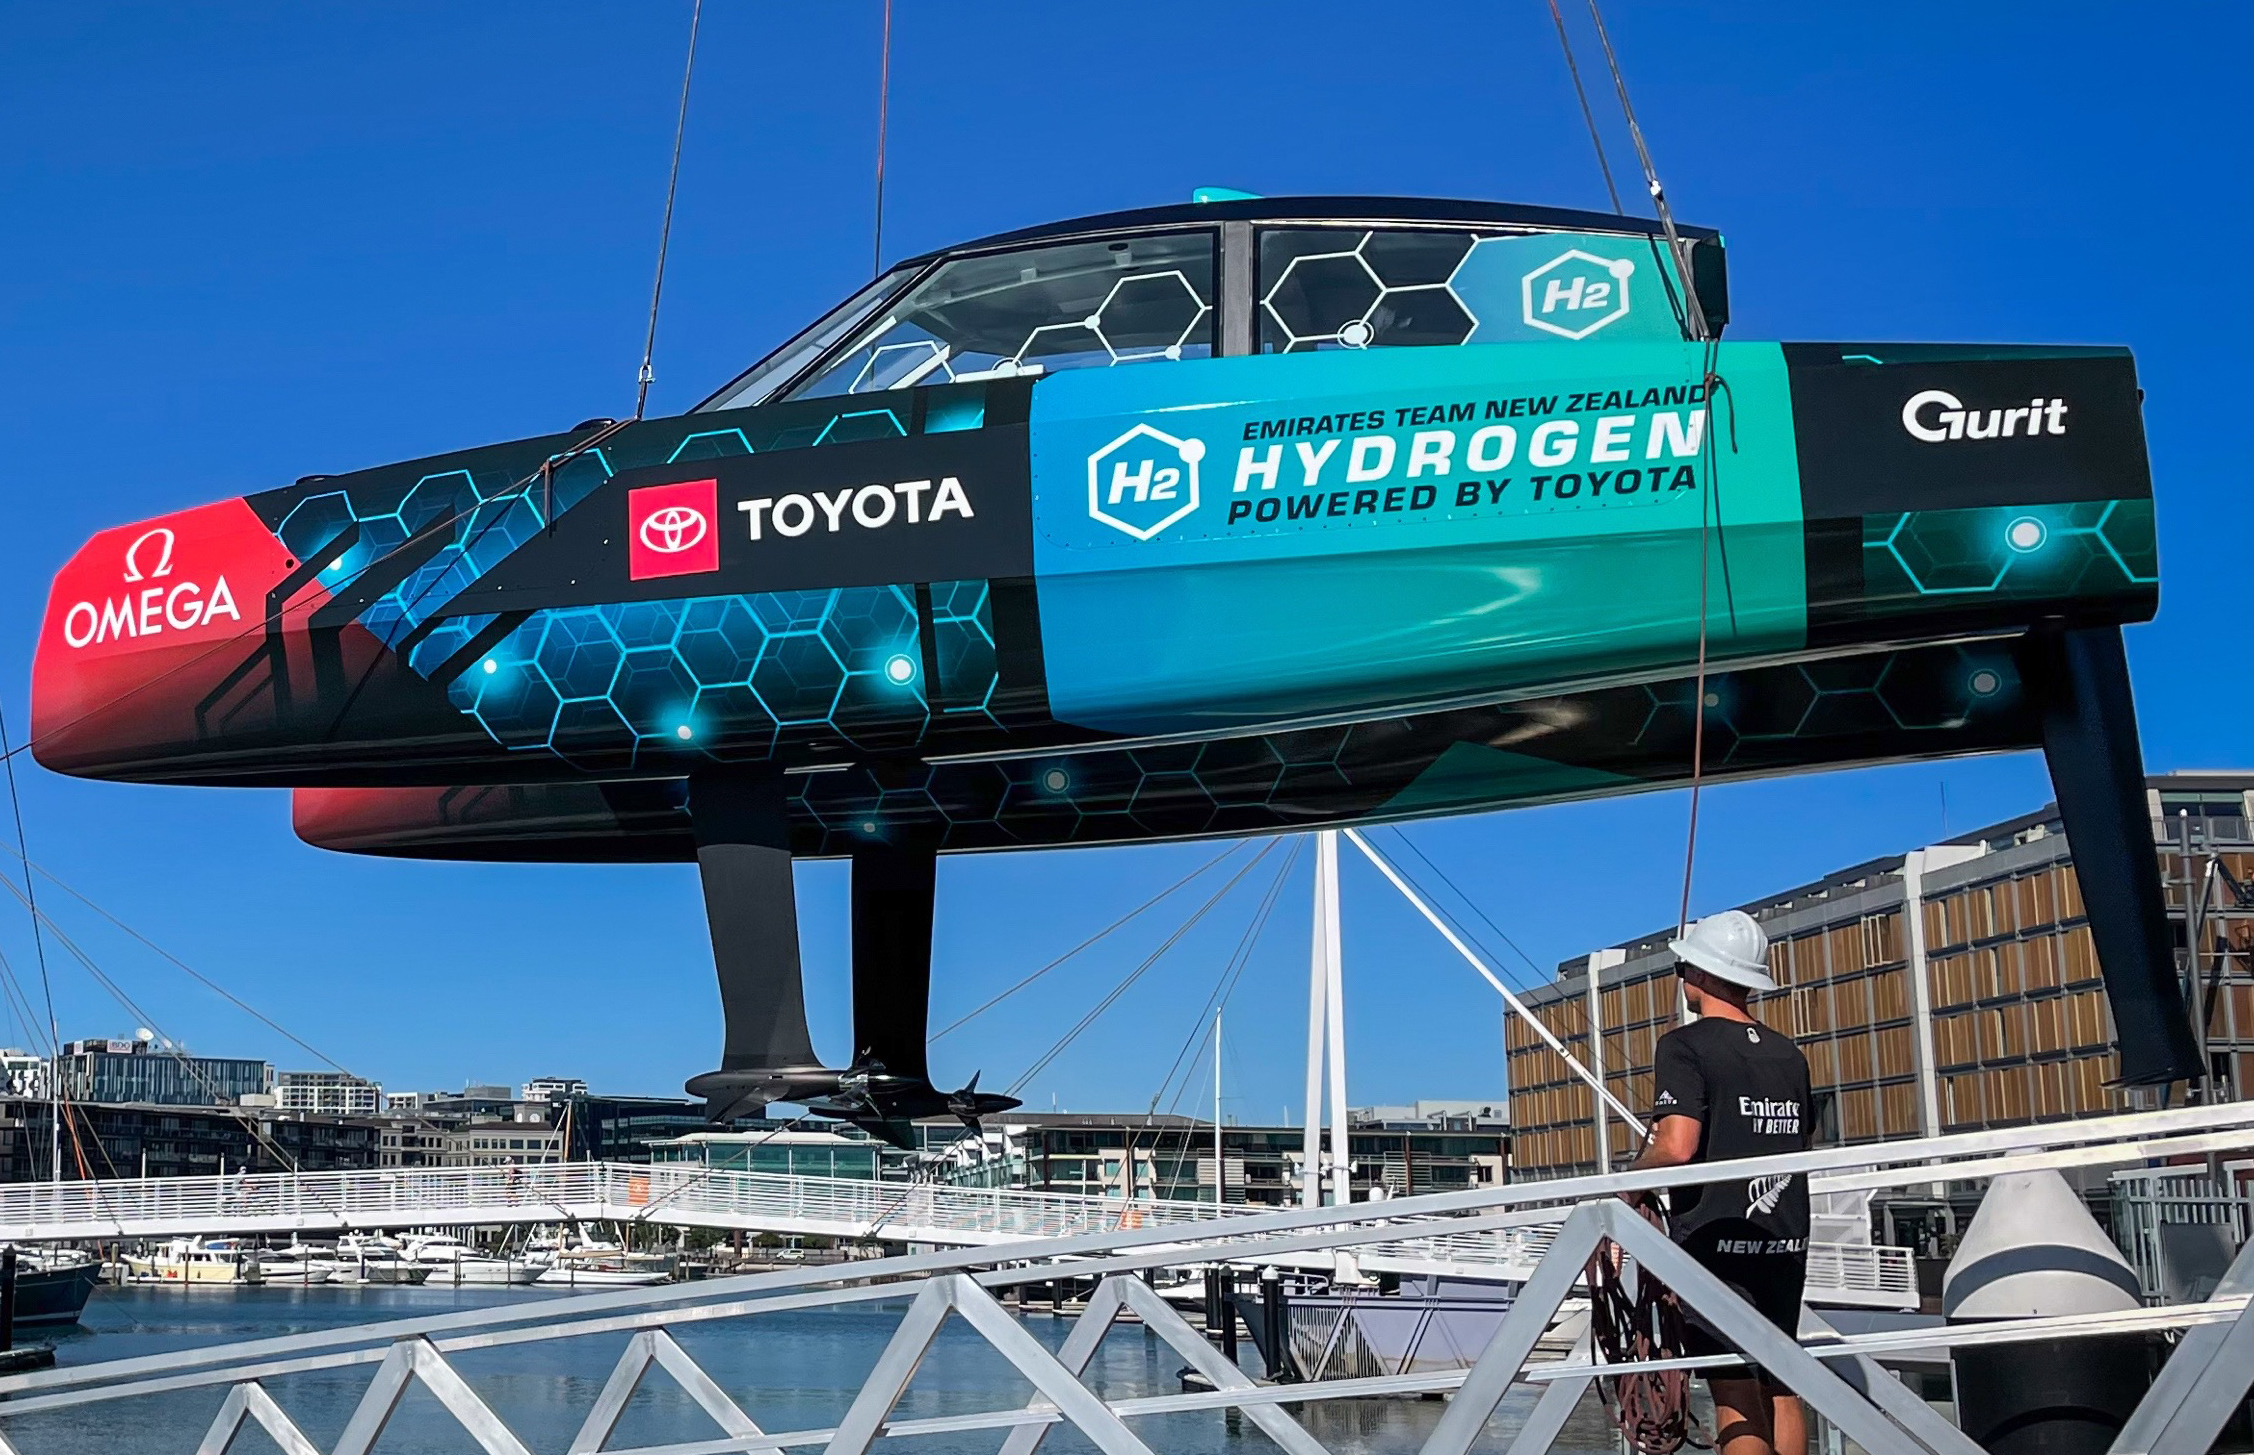 Chase Zero, Team New Zealand chase boat, hydrogen power